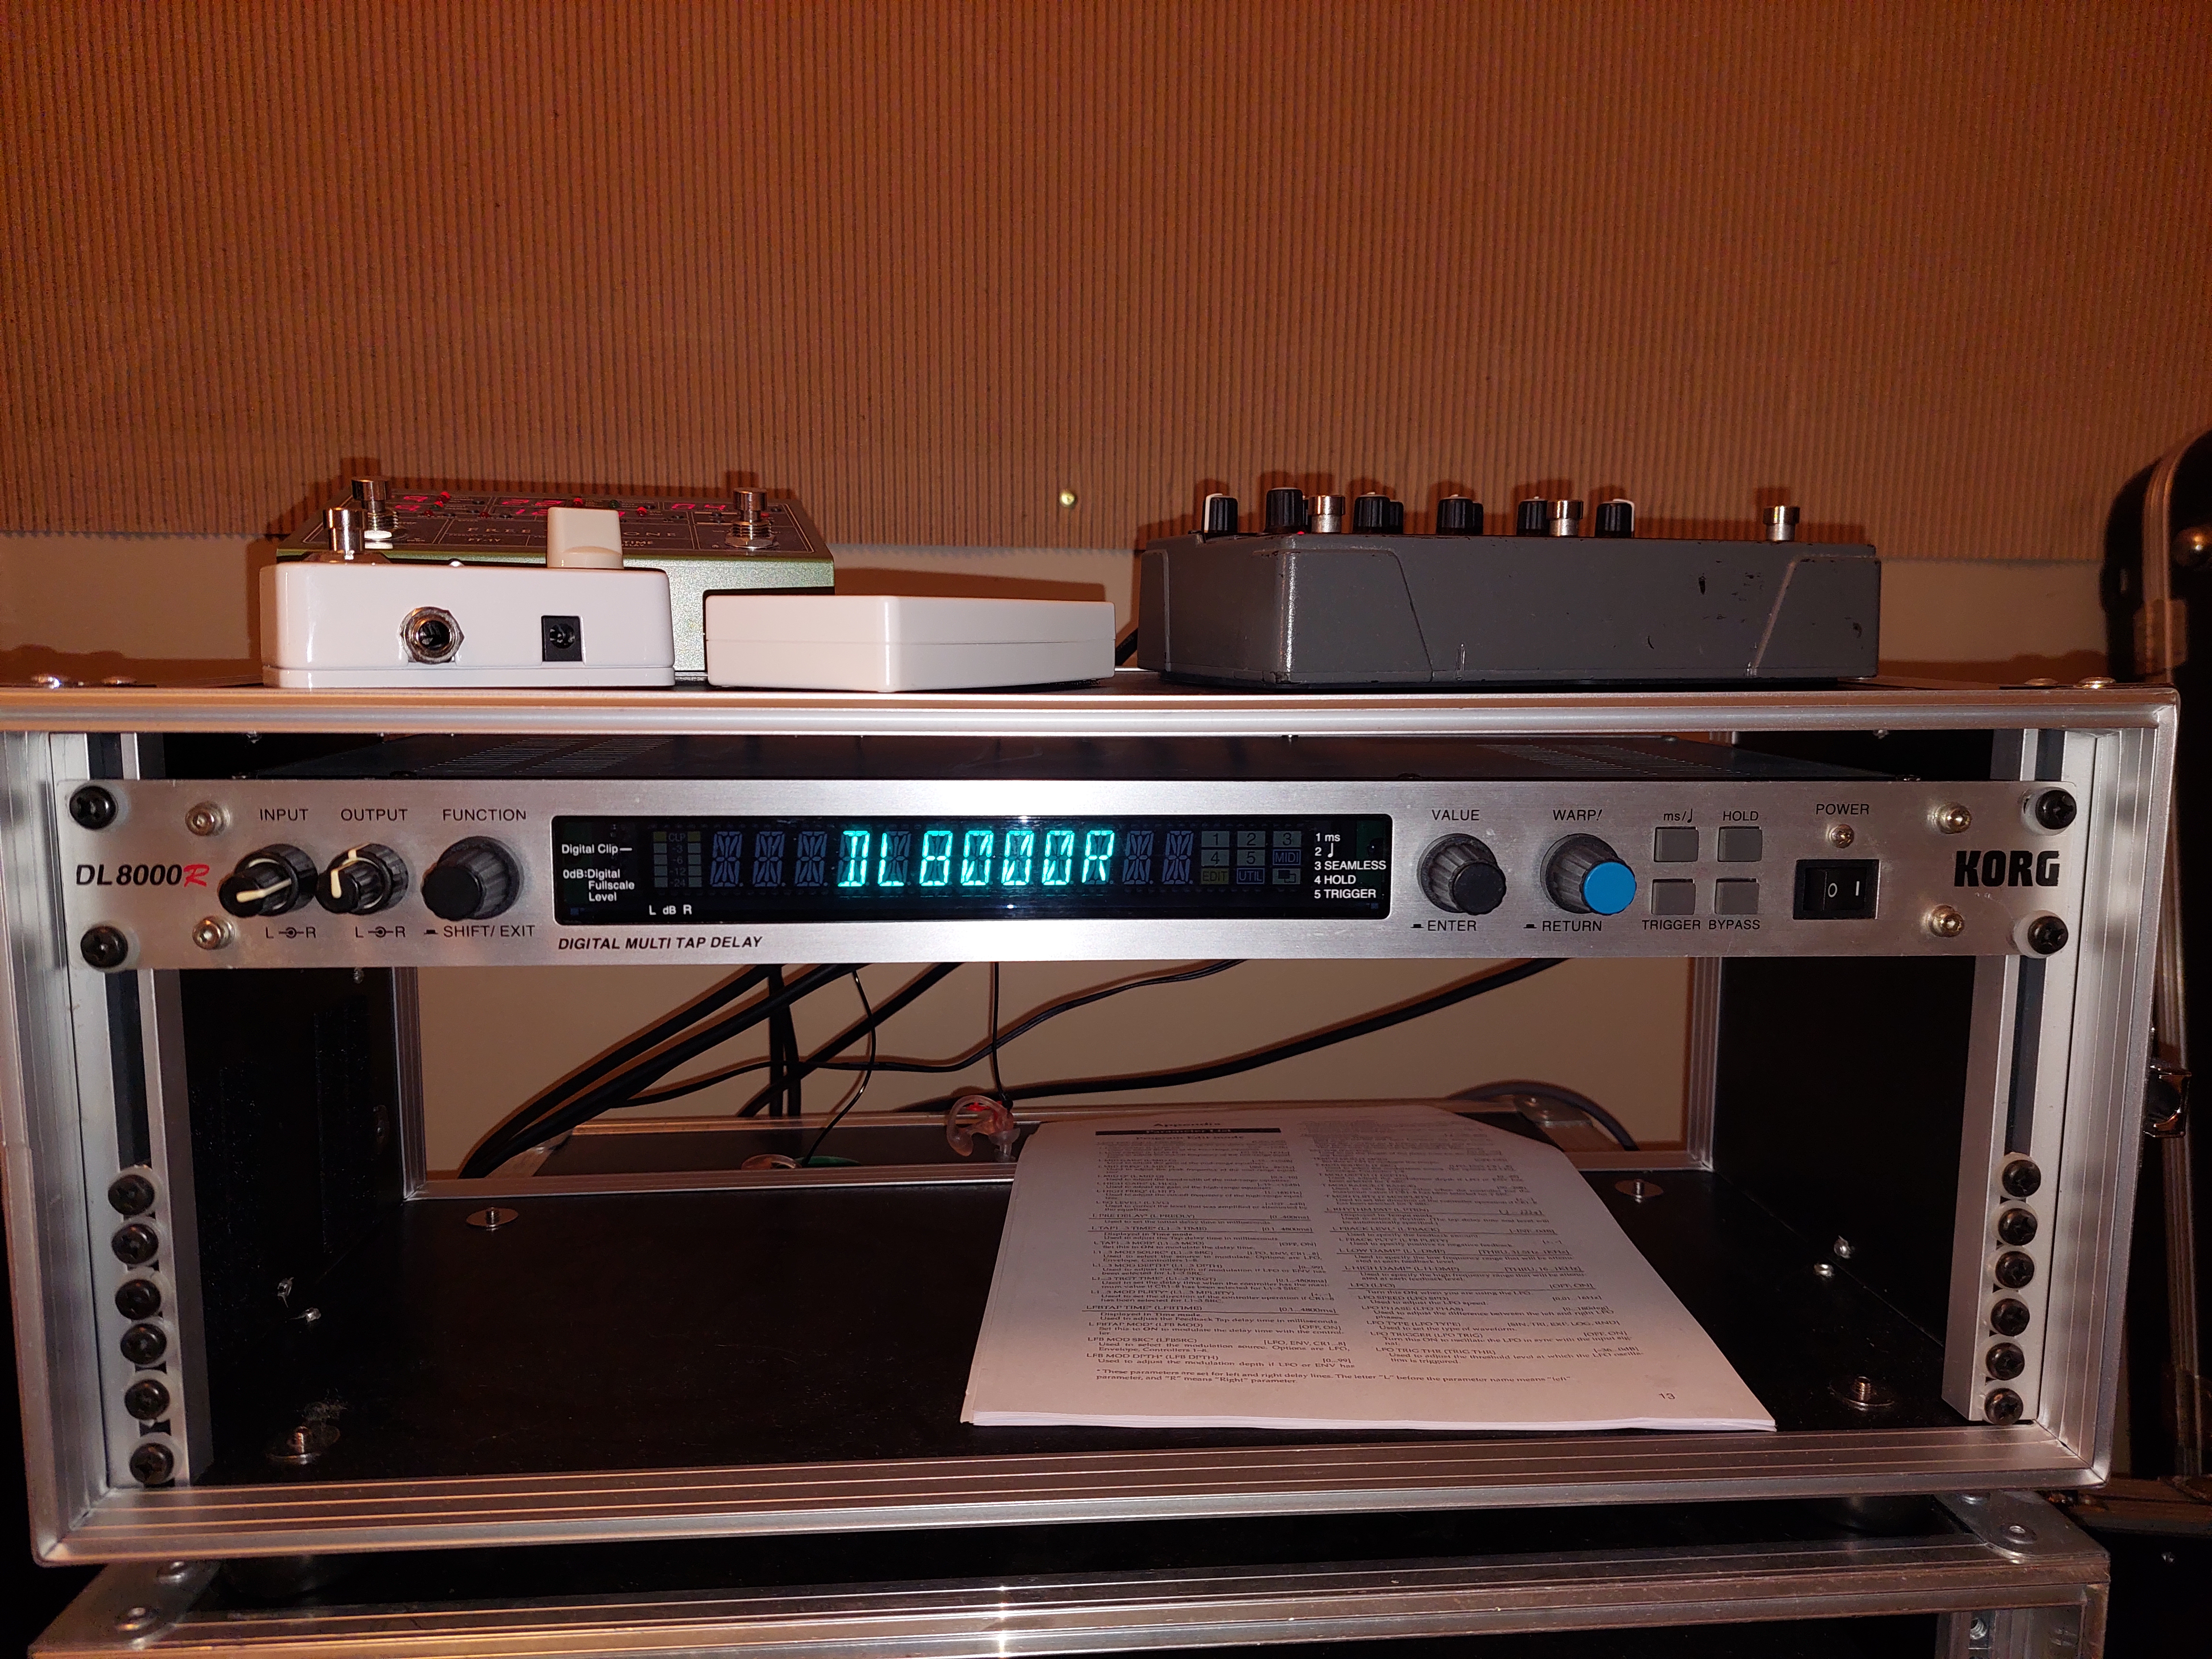 DL 8000R - Korg DL 8000R - Audiofanzine